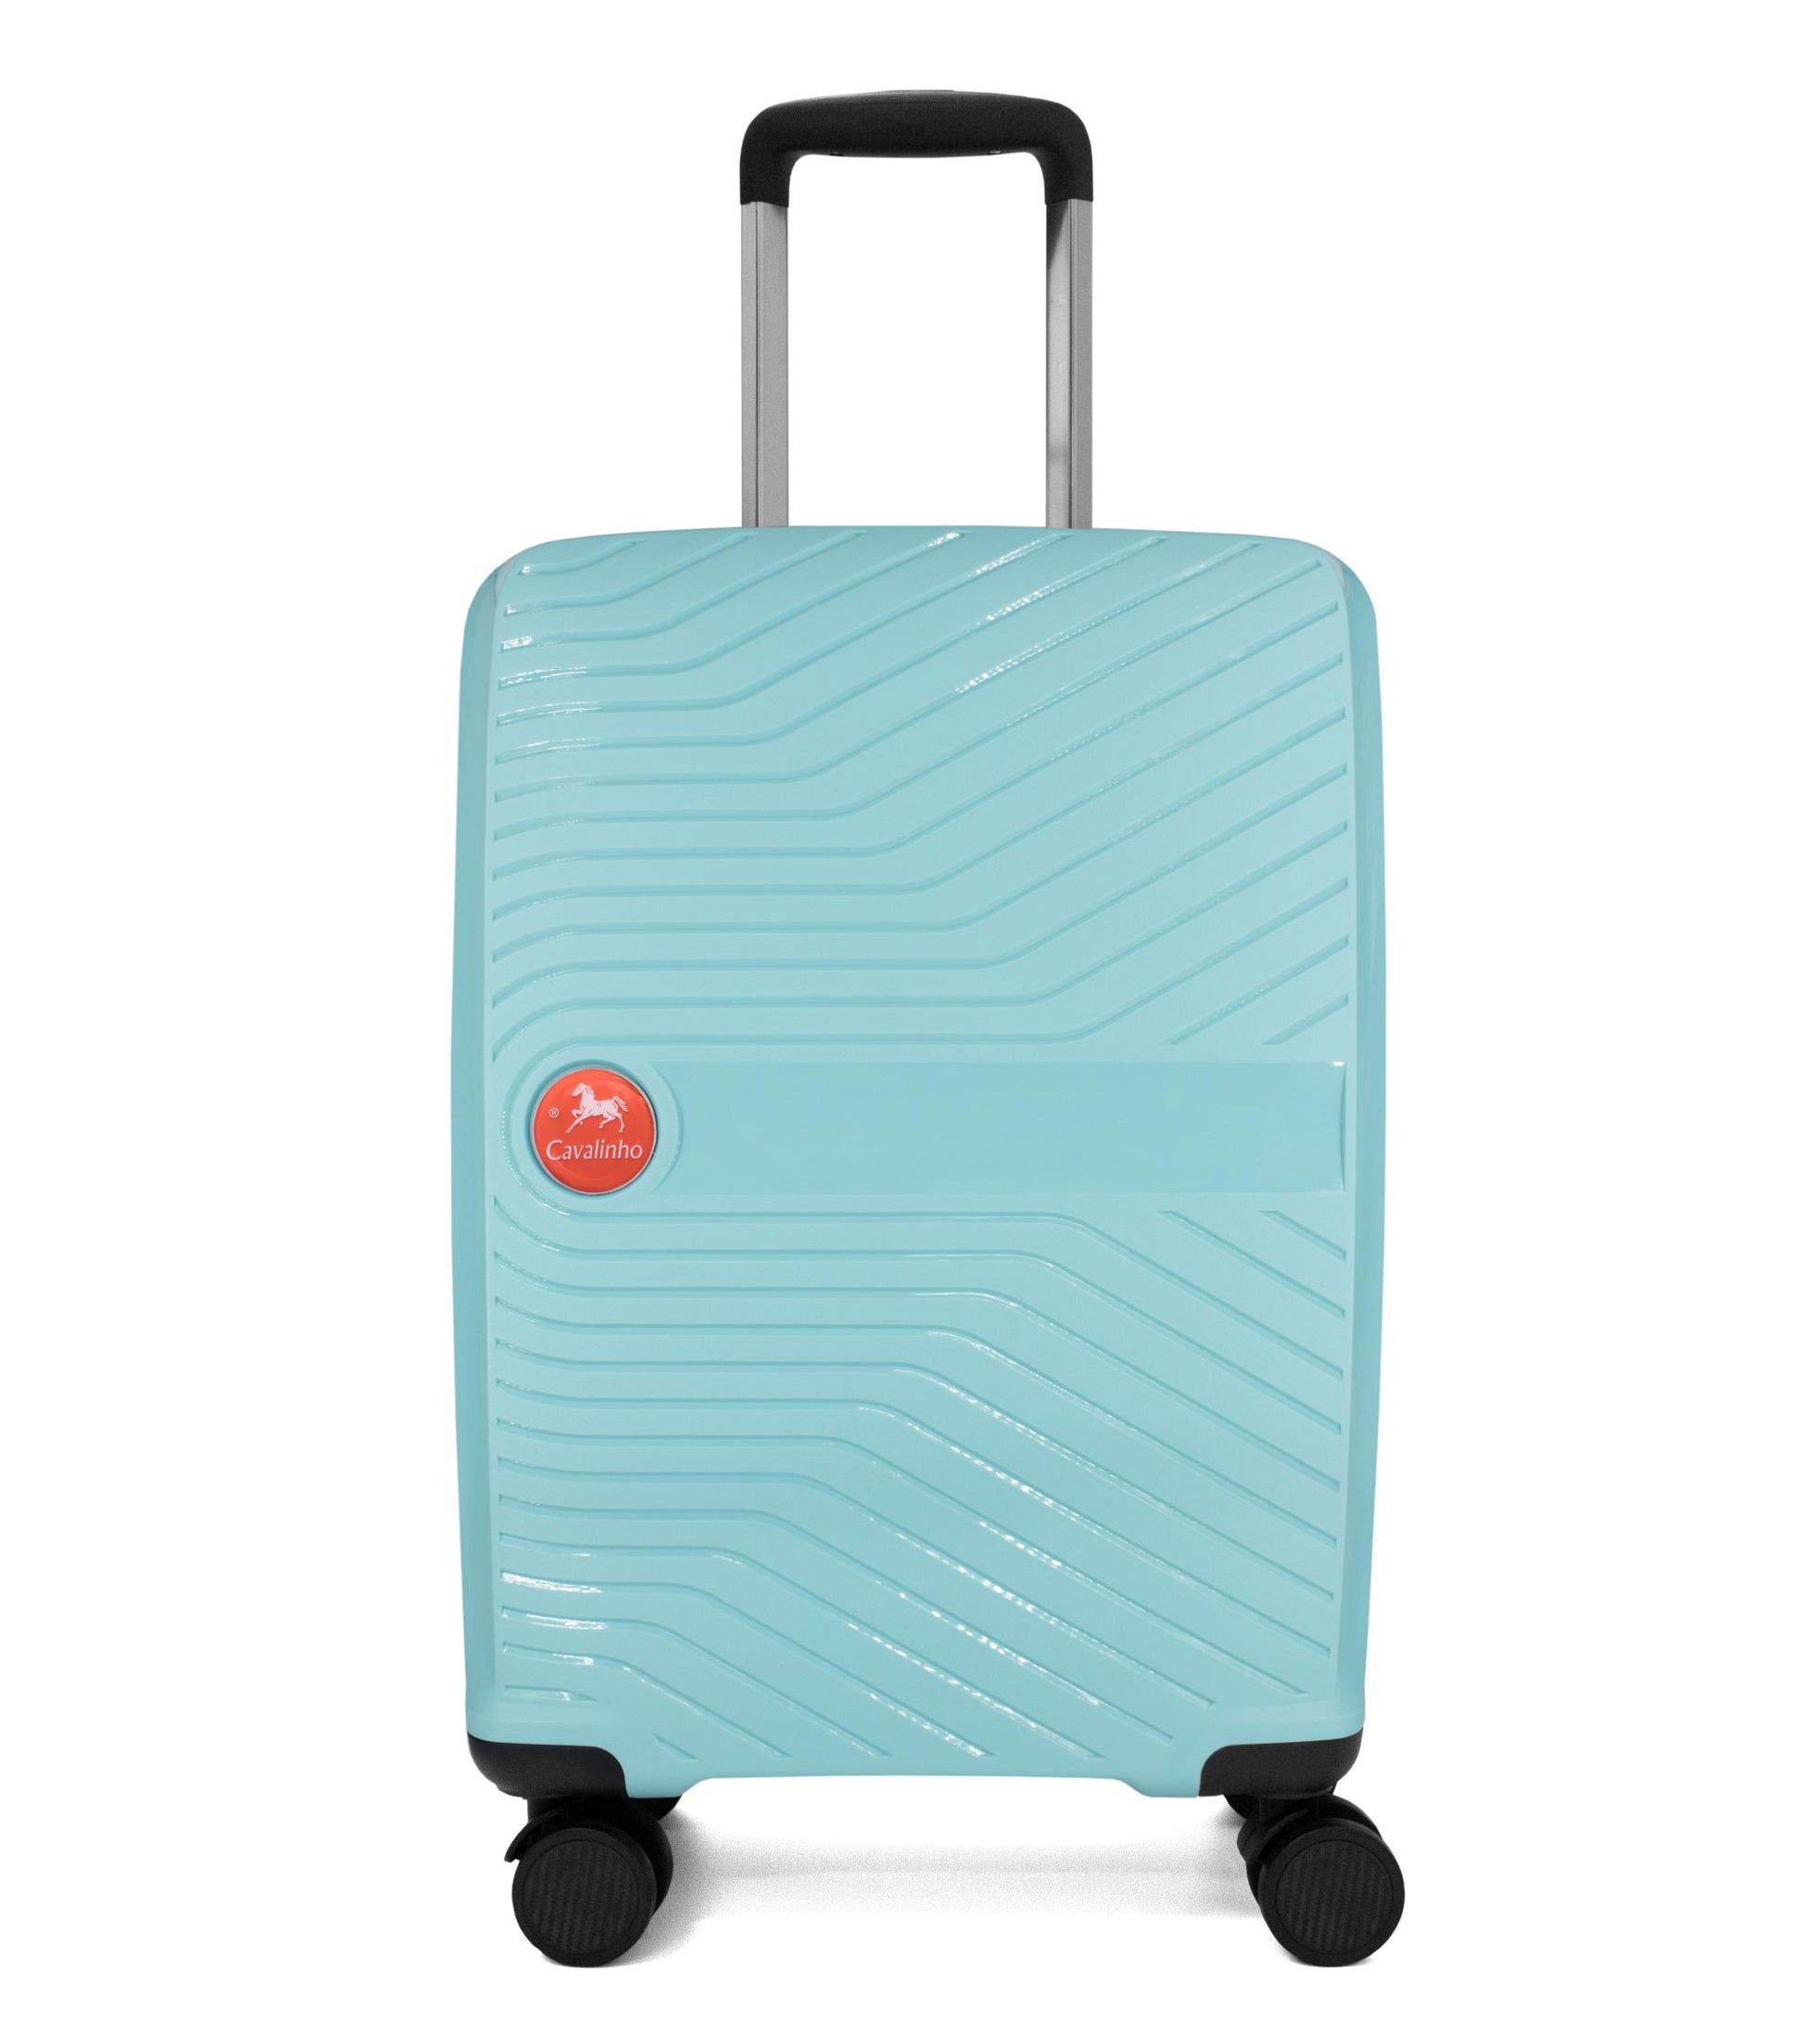 Cavalinho Colorful Carry-on Hardside Luggage (19") - 19 inch LightBlue - 68020004.10.19_1